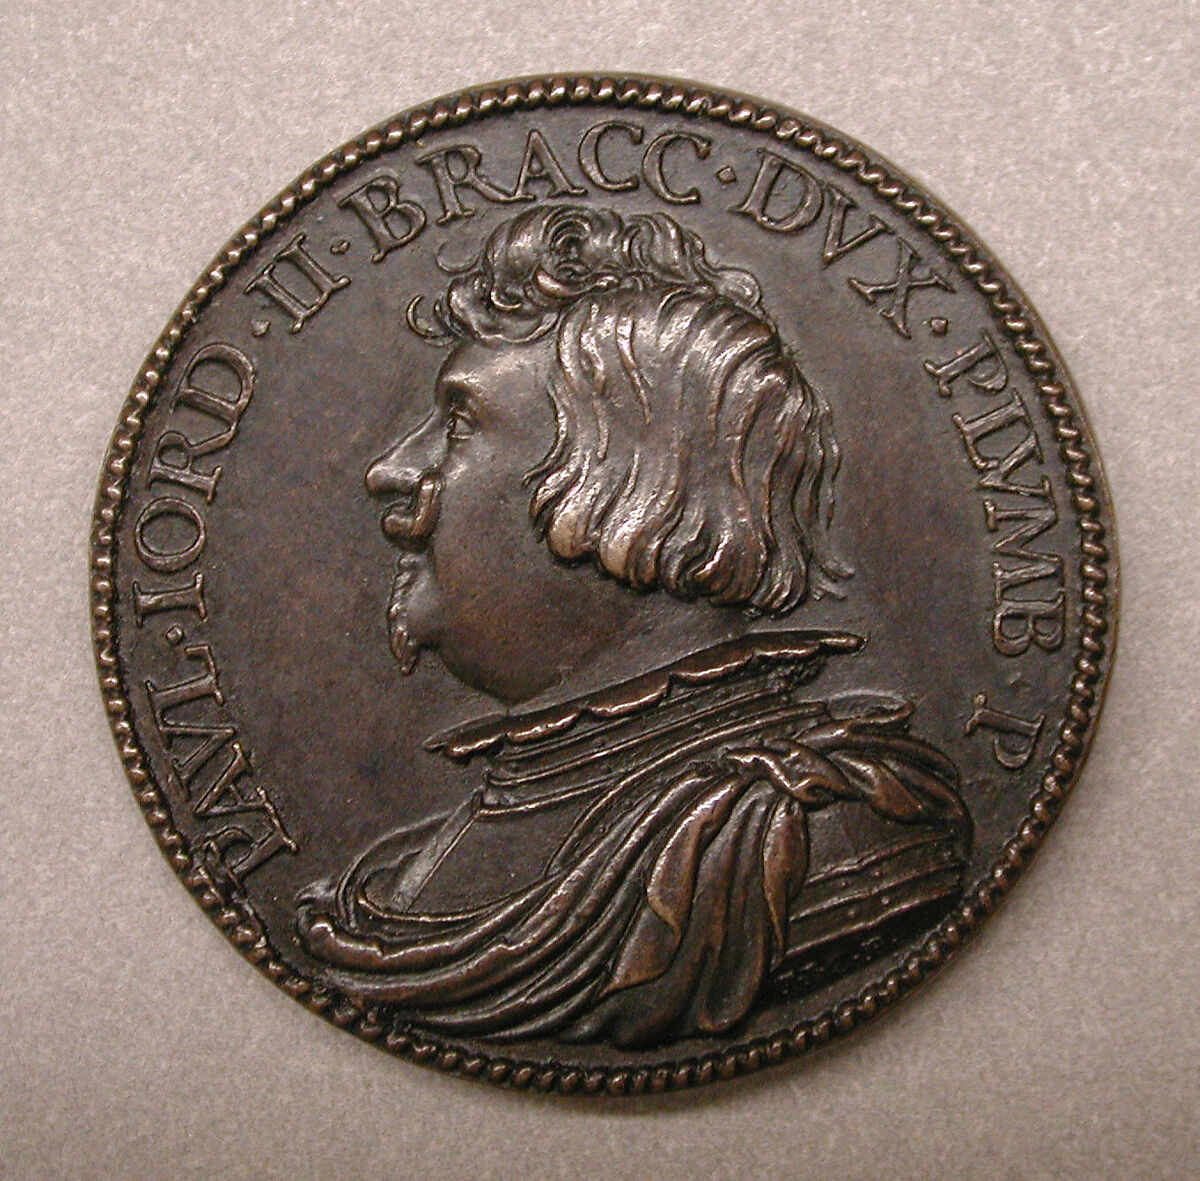 Paolo Giordano II Orsini (1591–1656), Medalist: Johann Jakob Kornmann (called Cormano) (born Augsburg 1620, active Rome, died after 1672), Bronze, Italian 